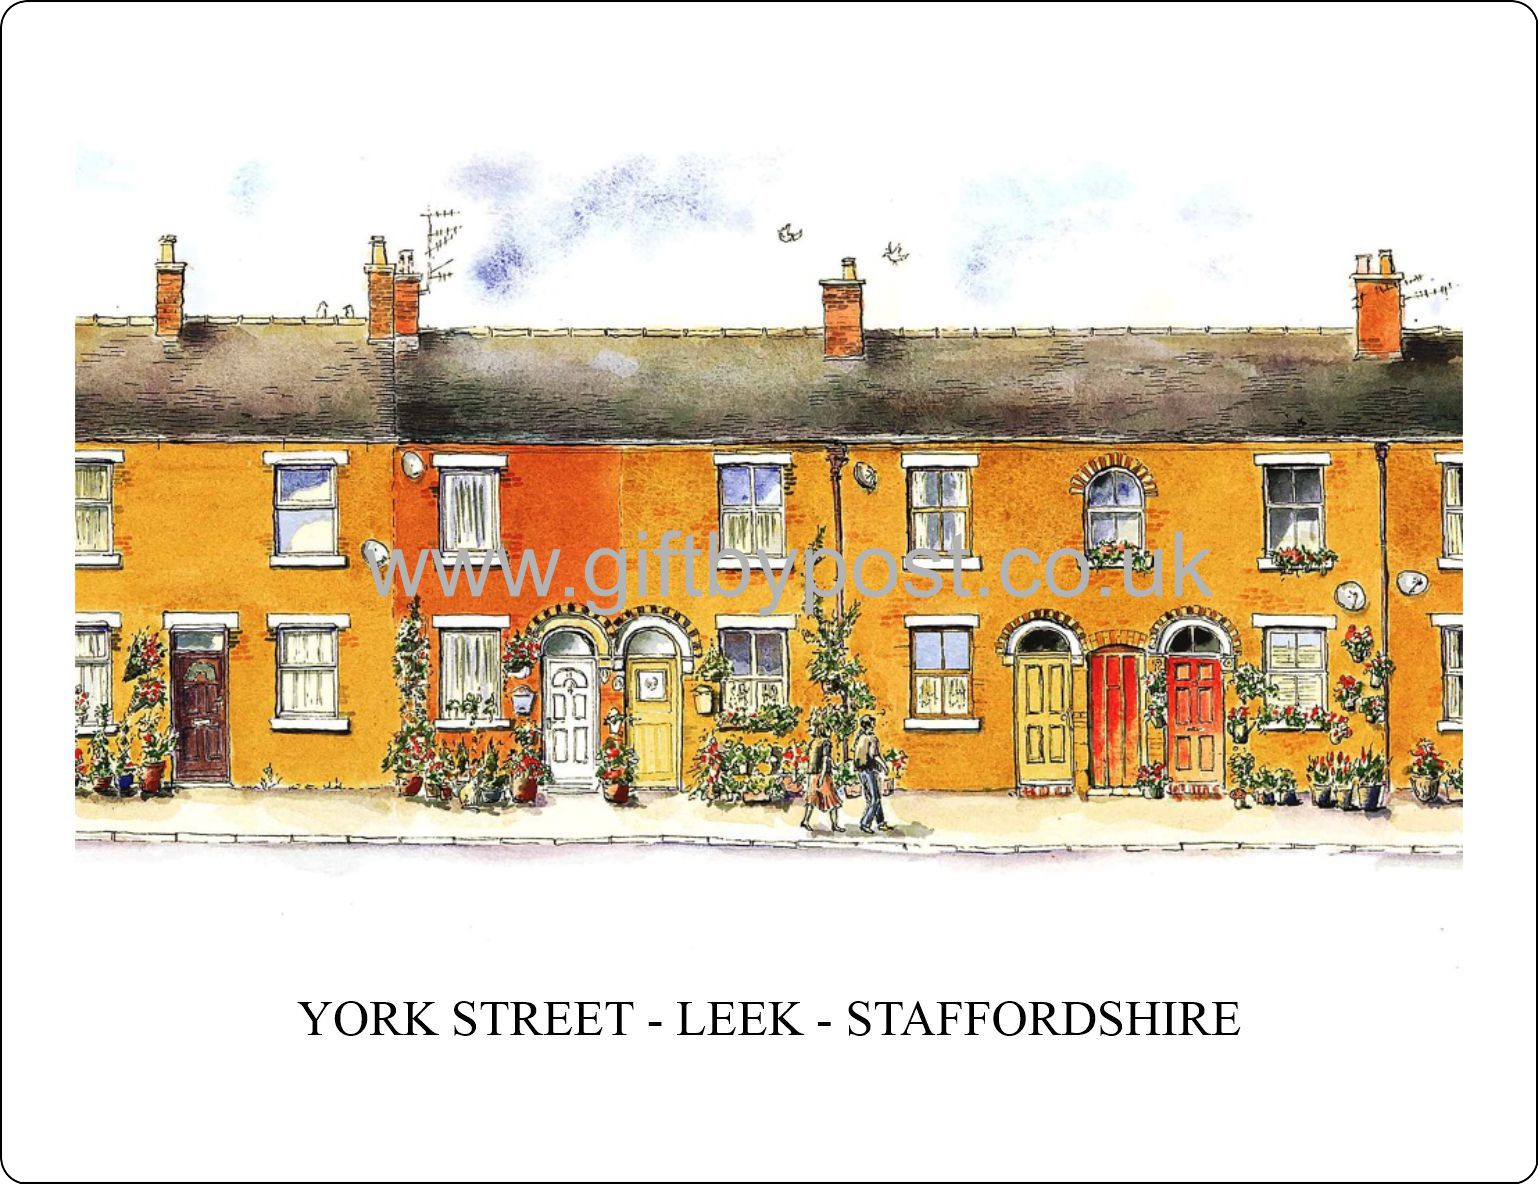 Placemat - Leek Staffordshire - York Street (2)